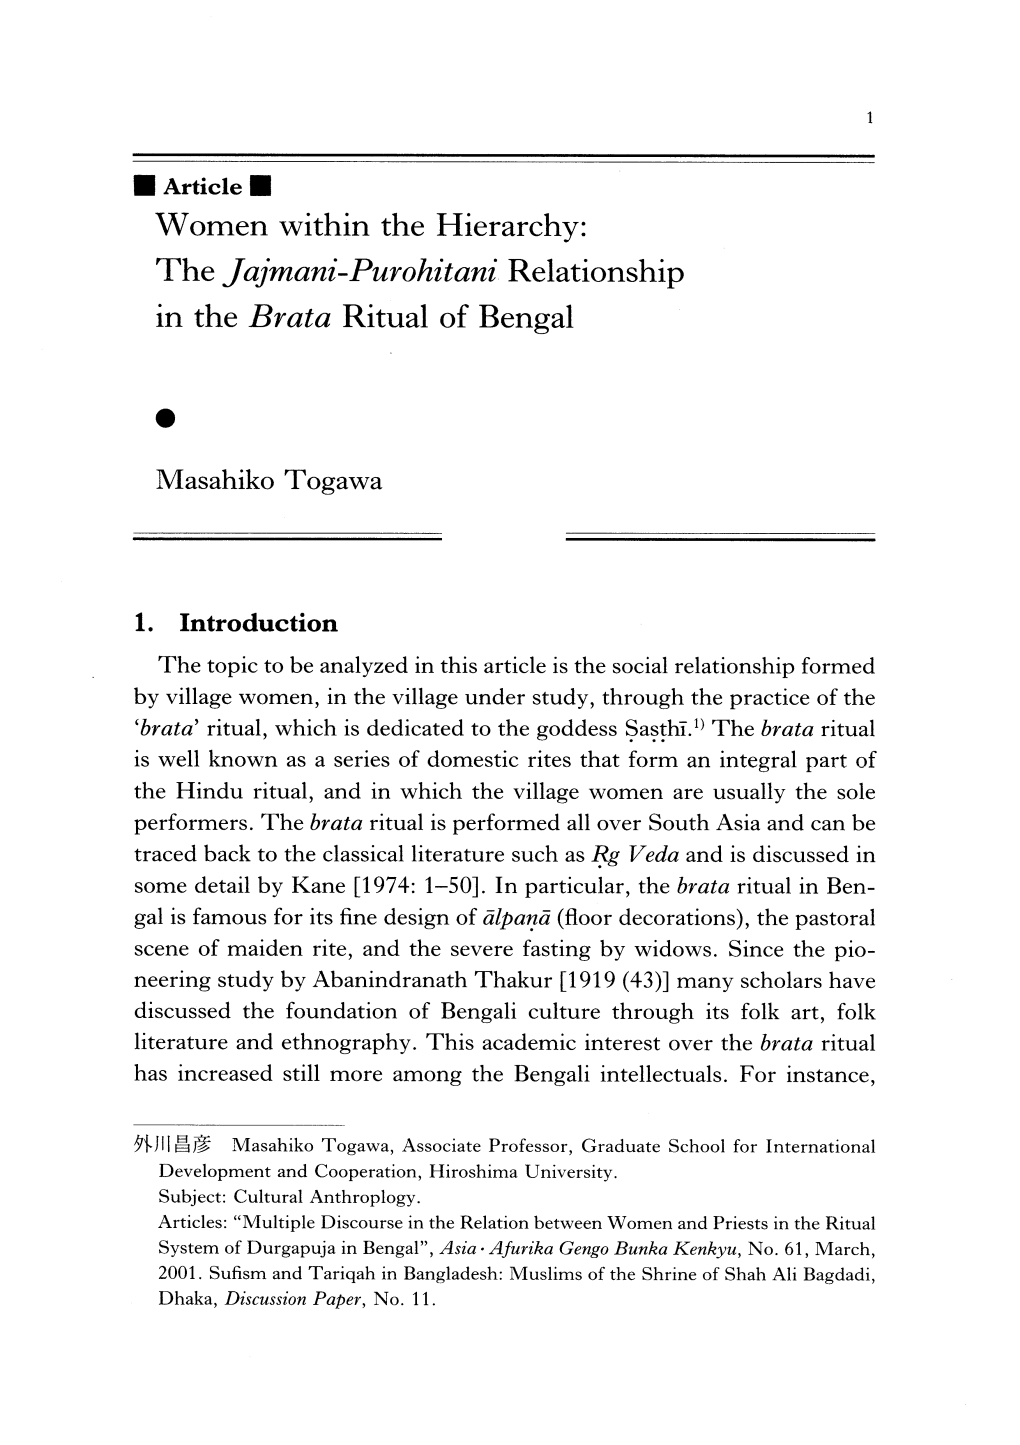 The Jajmani-Purohitani Relationship in the Brata Ritual of Bengal